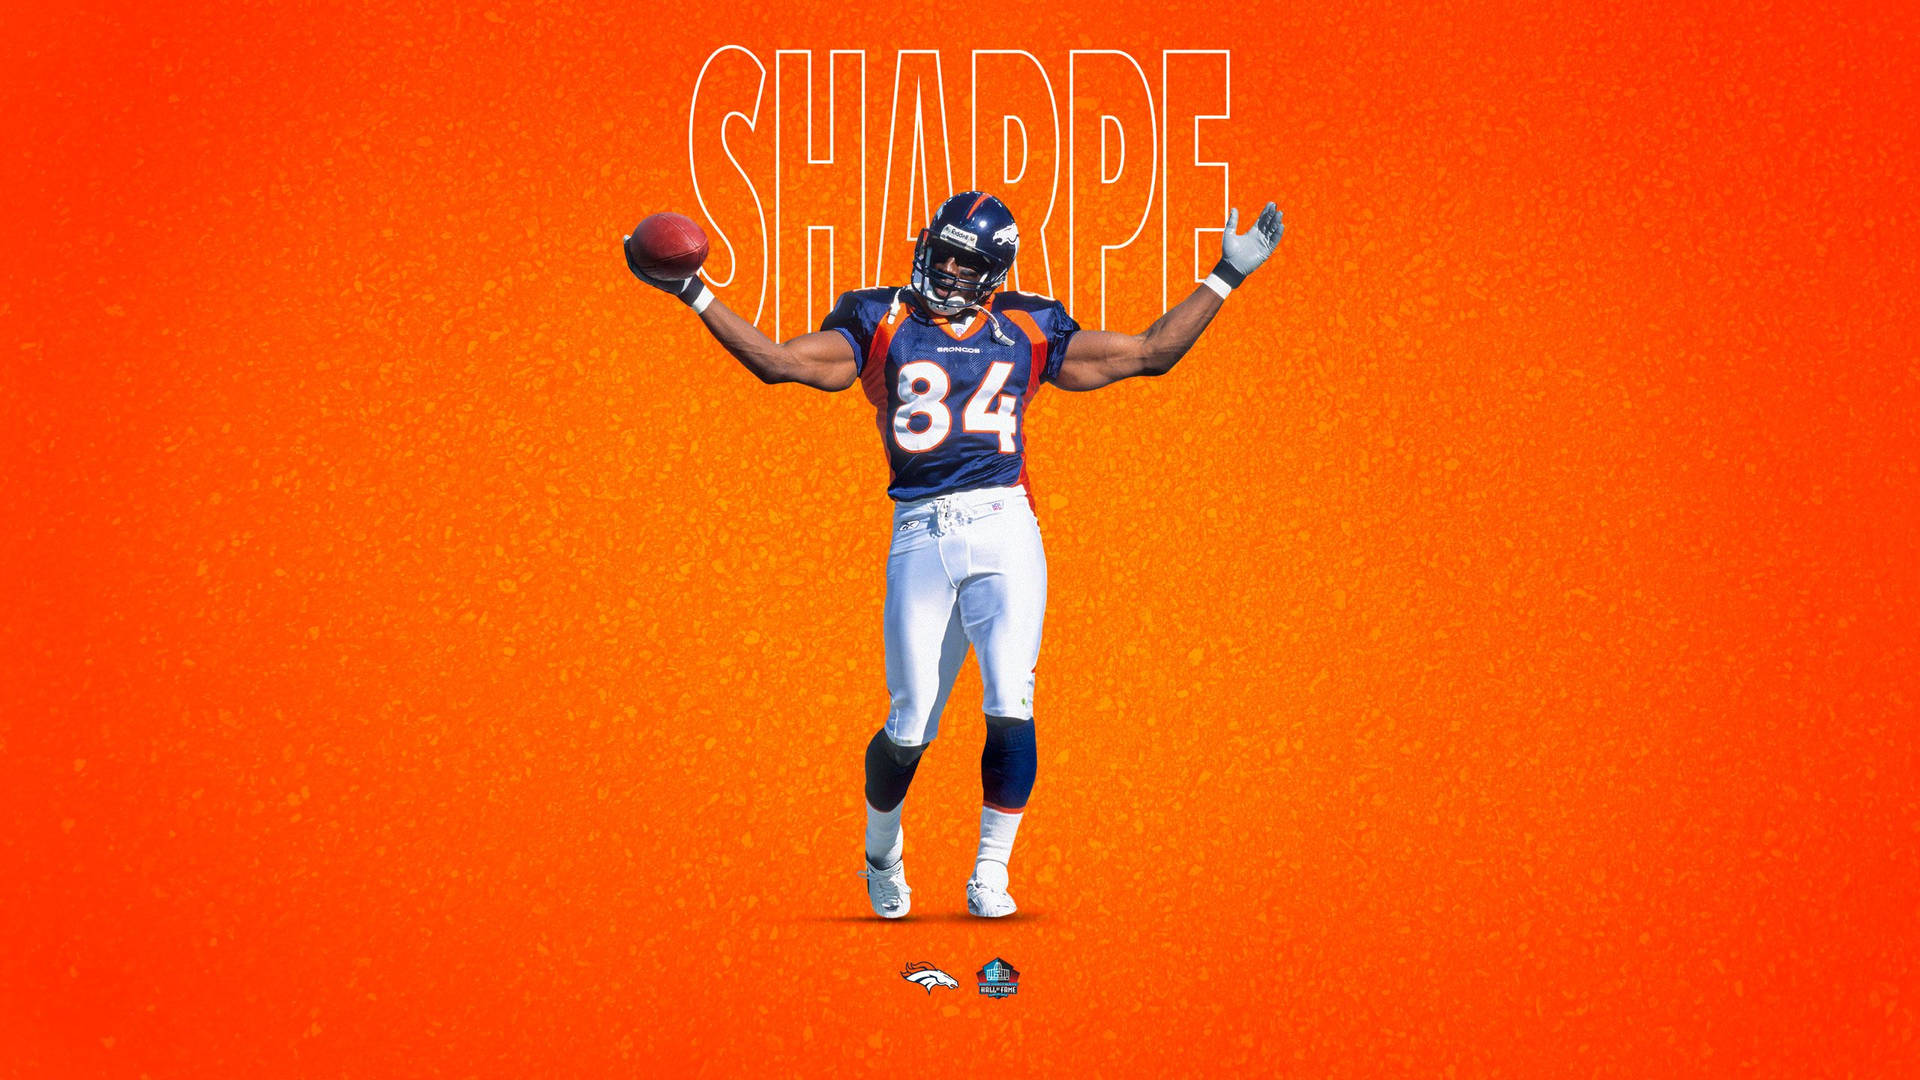 Denver Broncos wallpaper by jfreemon3981233  Download on ZEDGE  700c